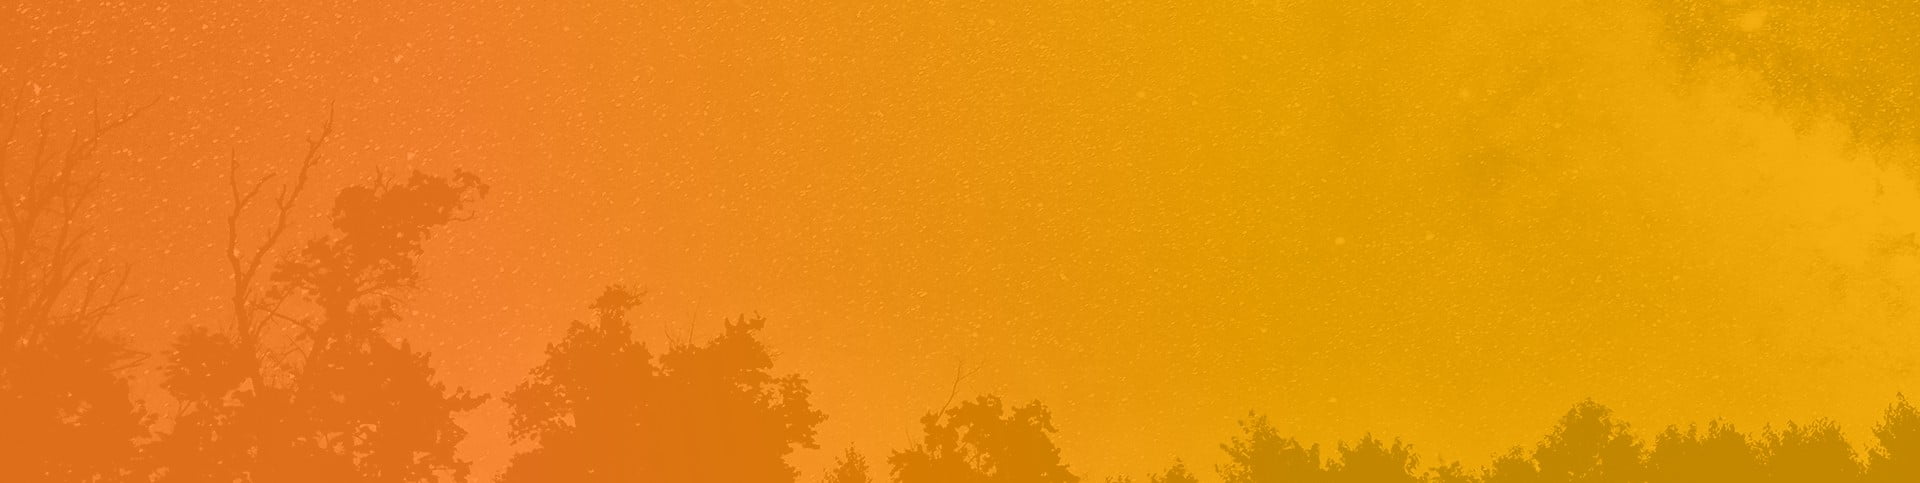 Orange Background with Tries